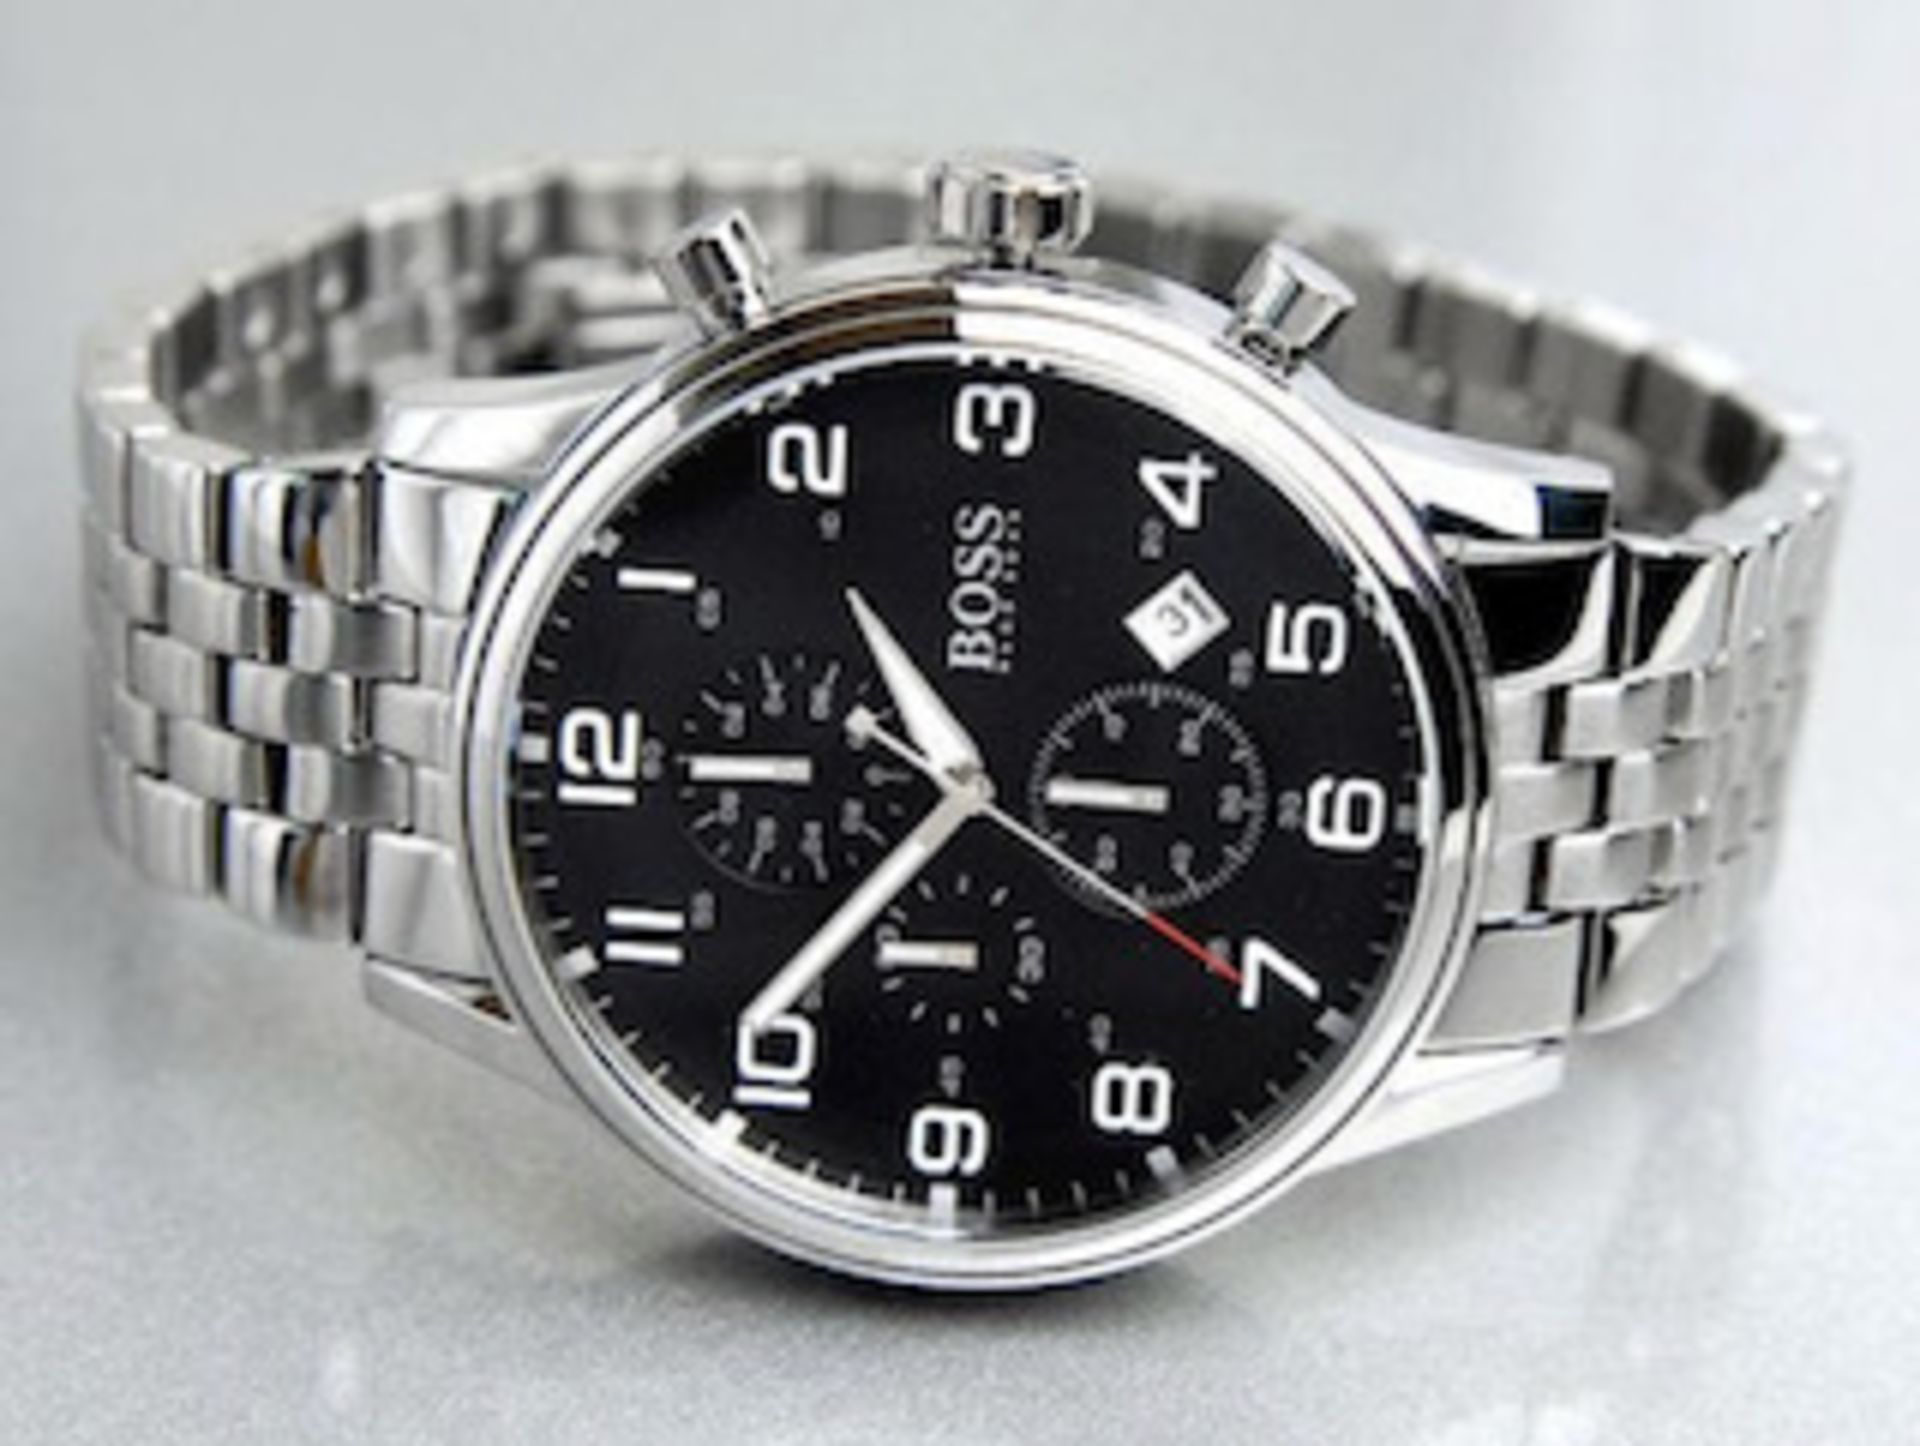 Hugo Boss 1512446 Men's Aeroliner Black Dial Silver Bracelet Chronograph Watch - Image 5 of 6